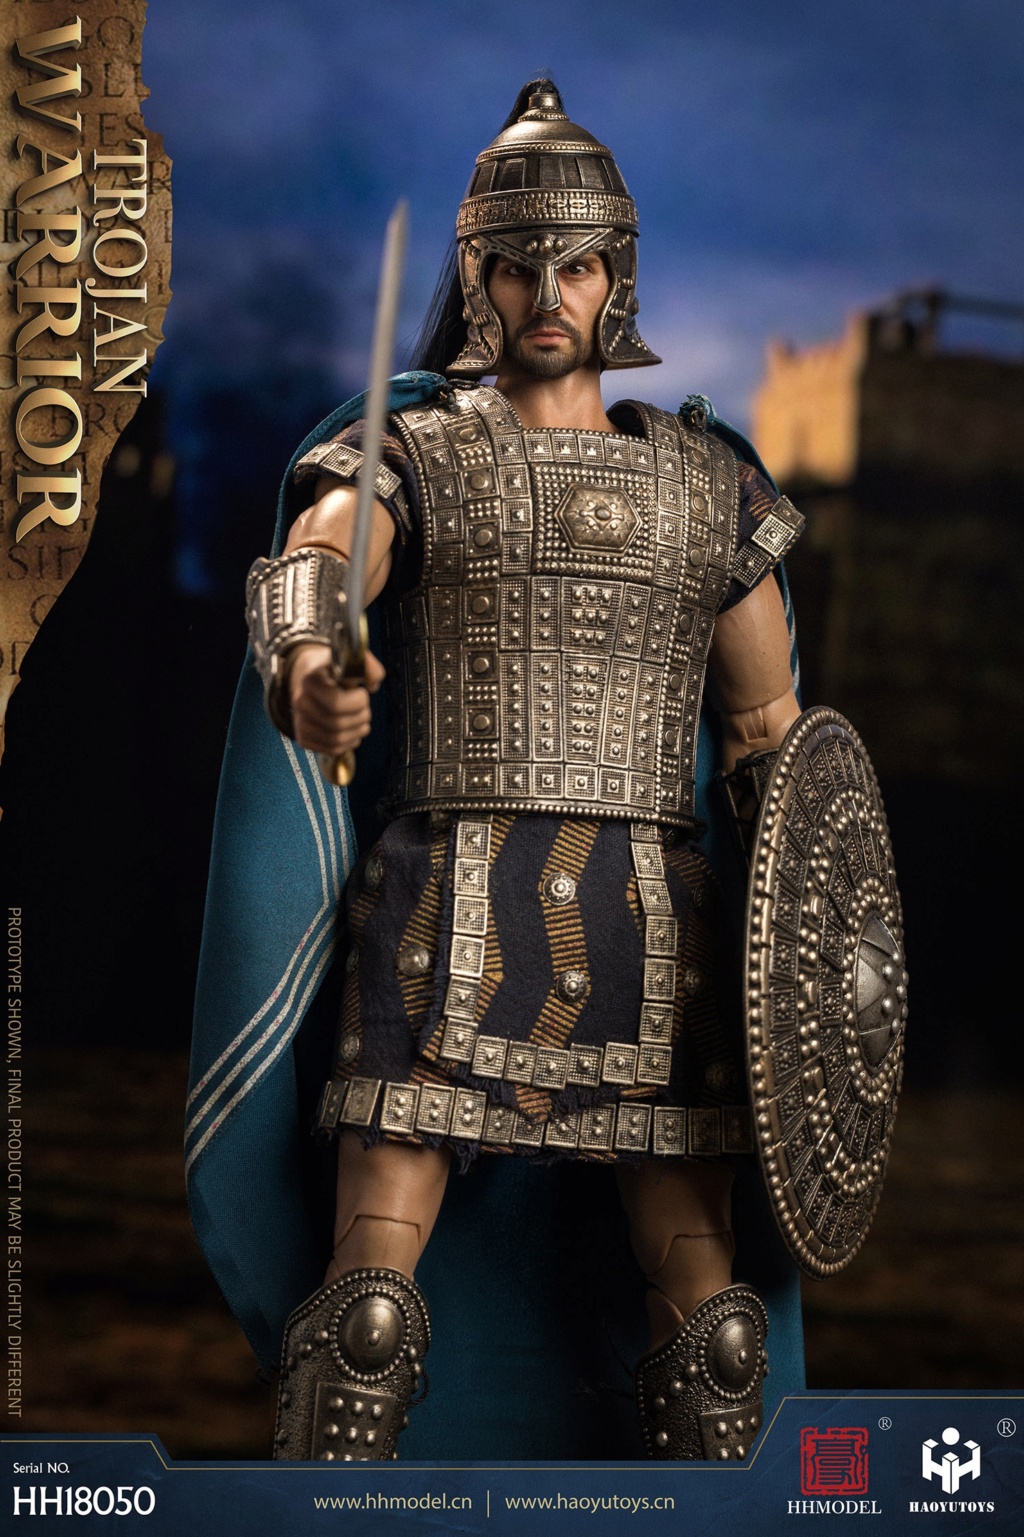 movie-based - NEW PRODUCT: HHMODEL & HAOYUTOYS: 1/6 Imperial Legion - Trojan Warrior Action Figure #HH18050 13273410